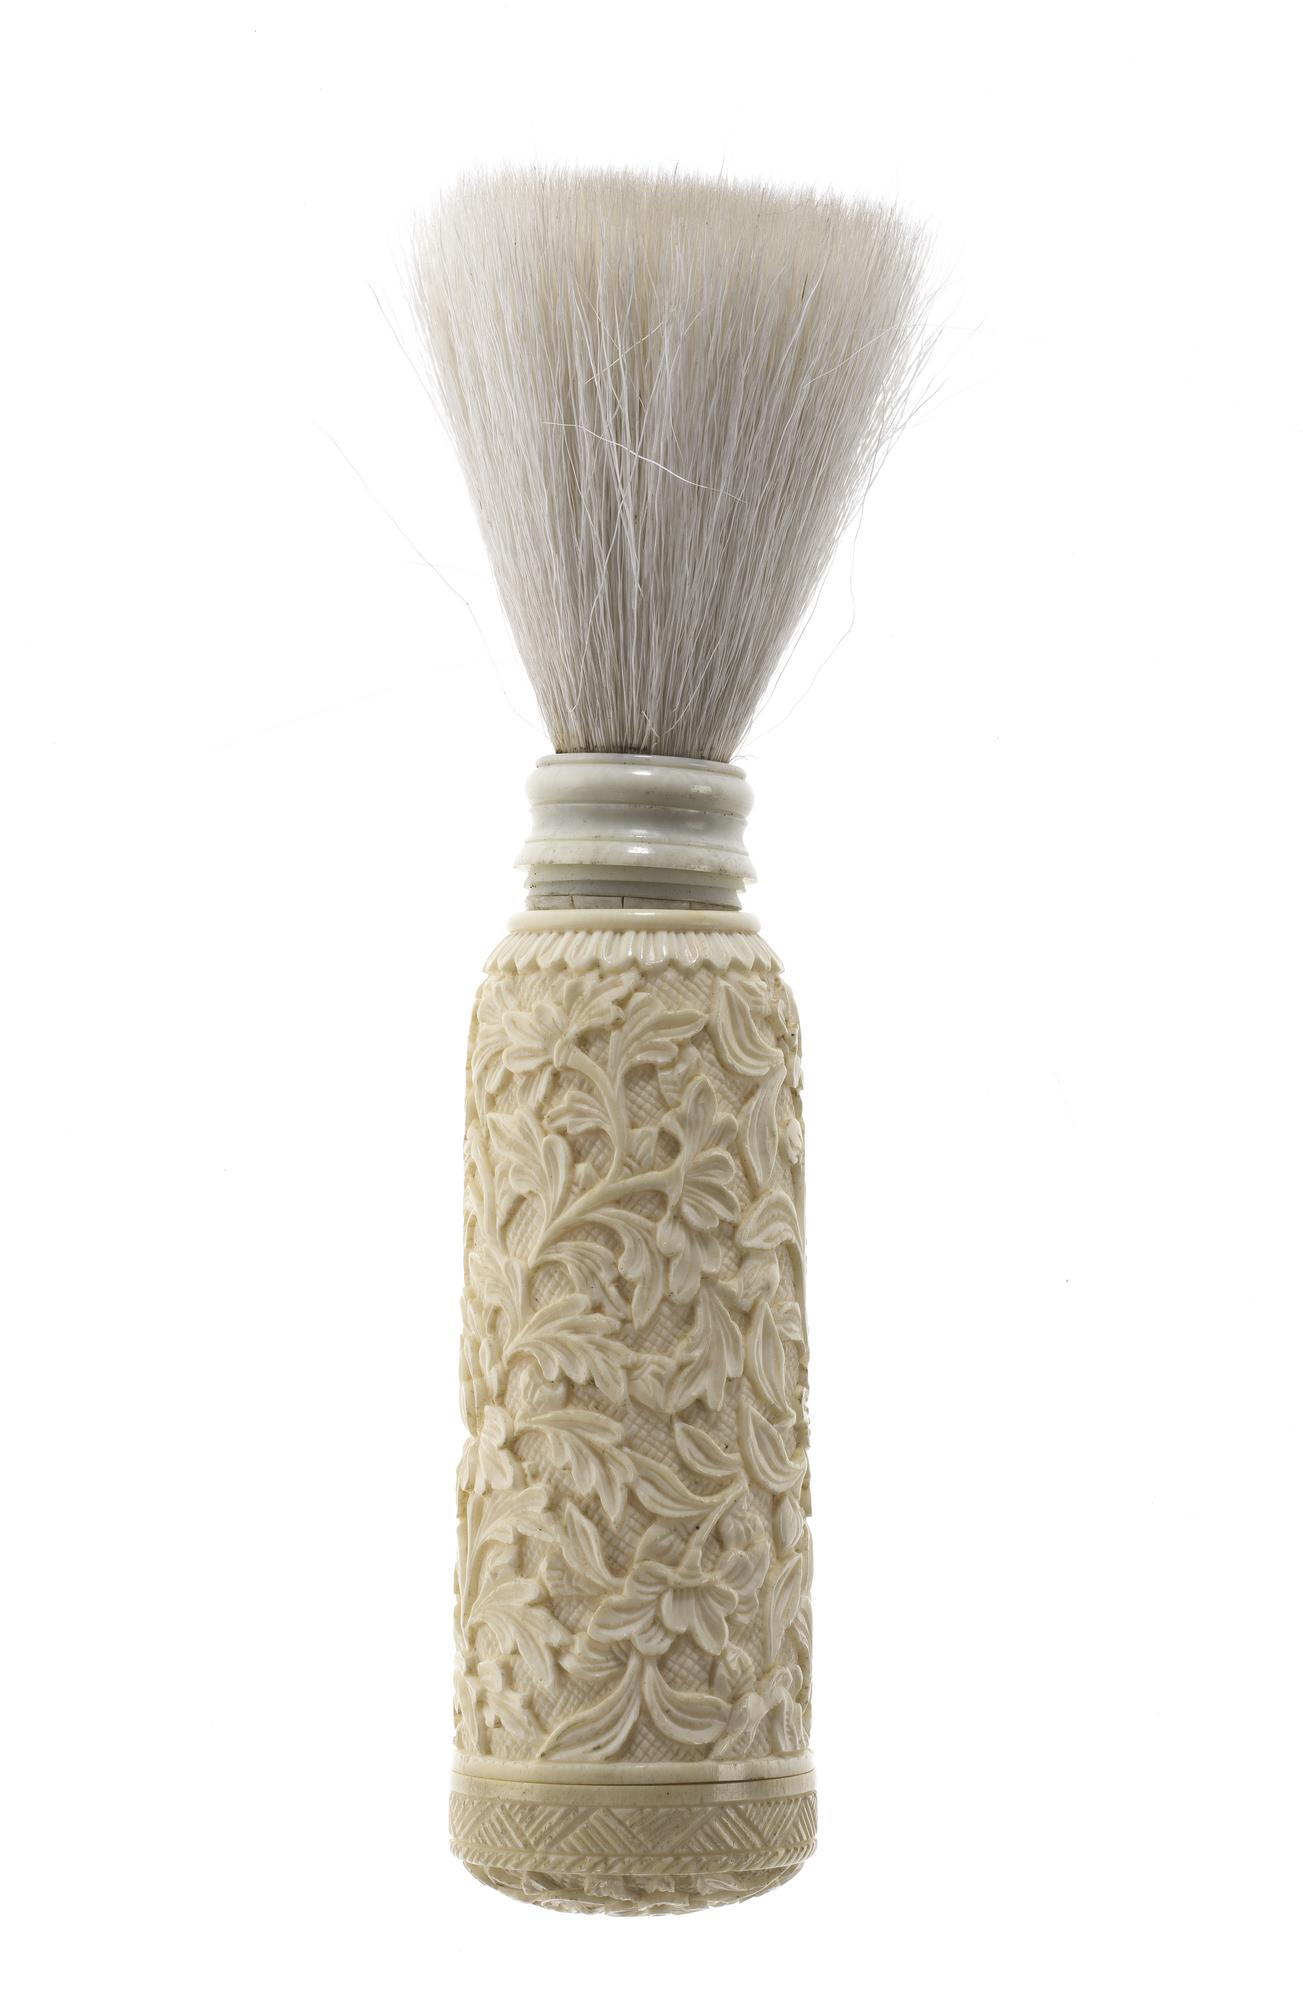 carvings-shavingbrush.jpg